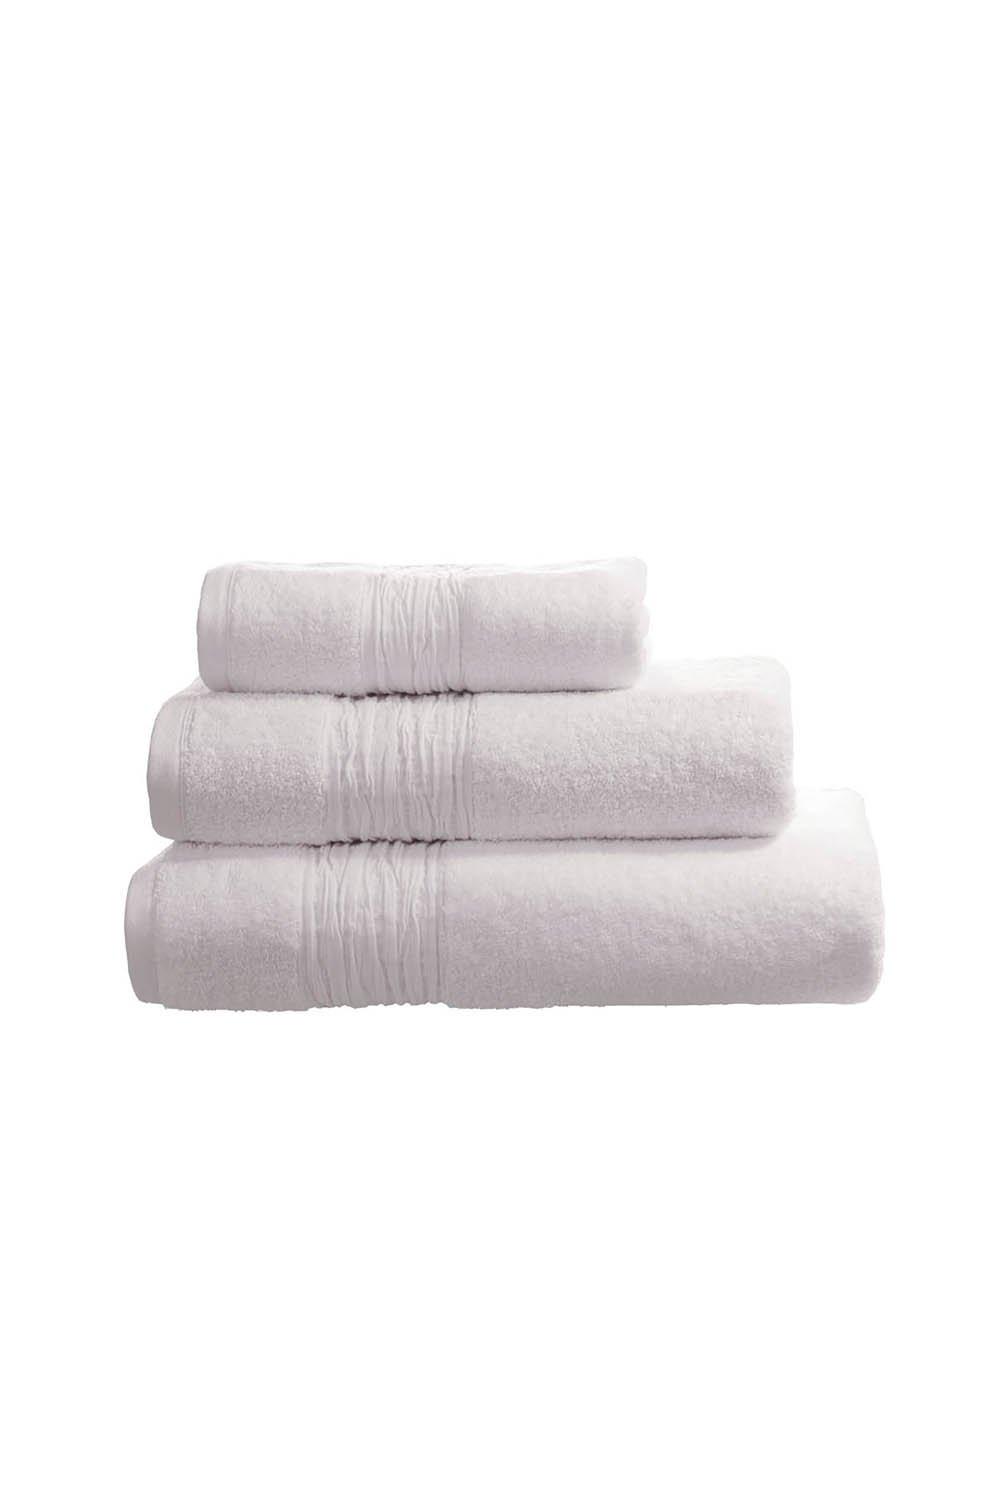 Turkish Cotton With Linen Blend Insert Border 600gsm Bath Sheet (Pack of 2)